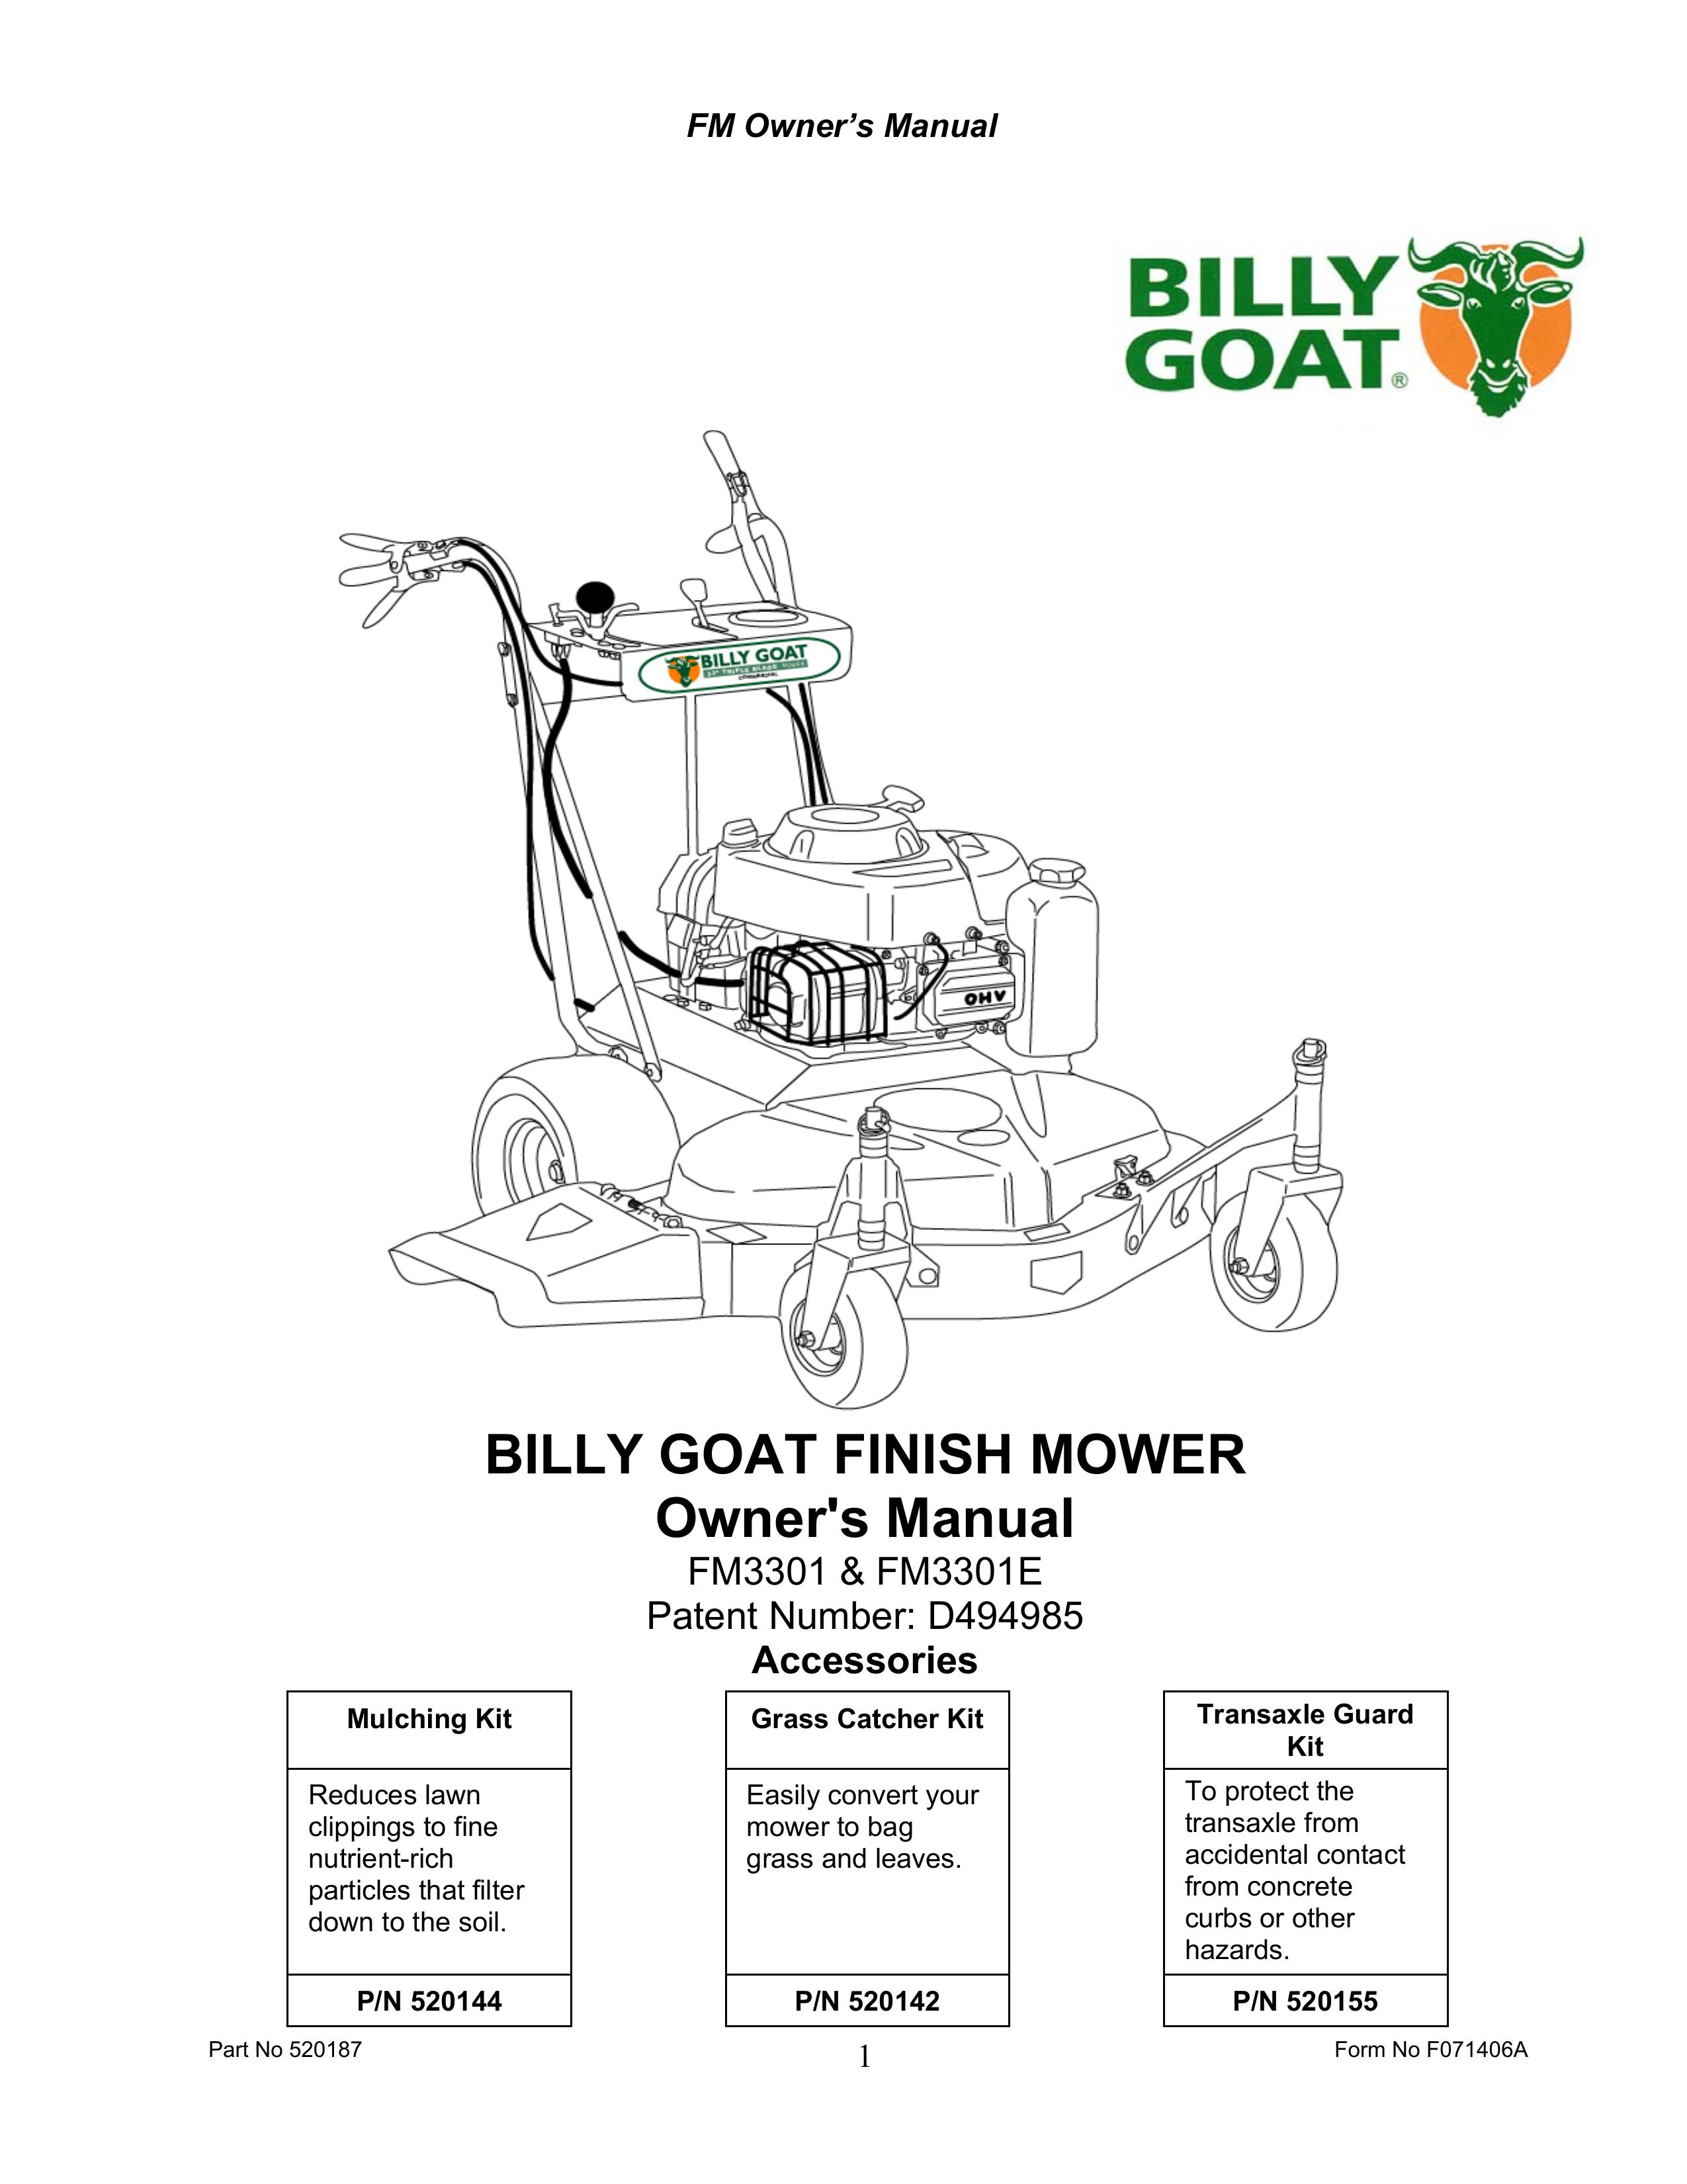 Billy Goat FM3301, FM3301E Lawn Mower User Manual